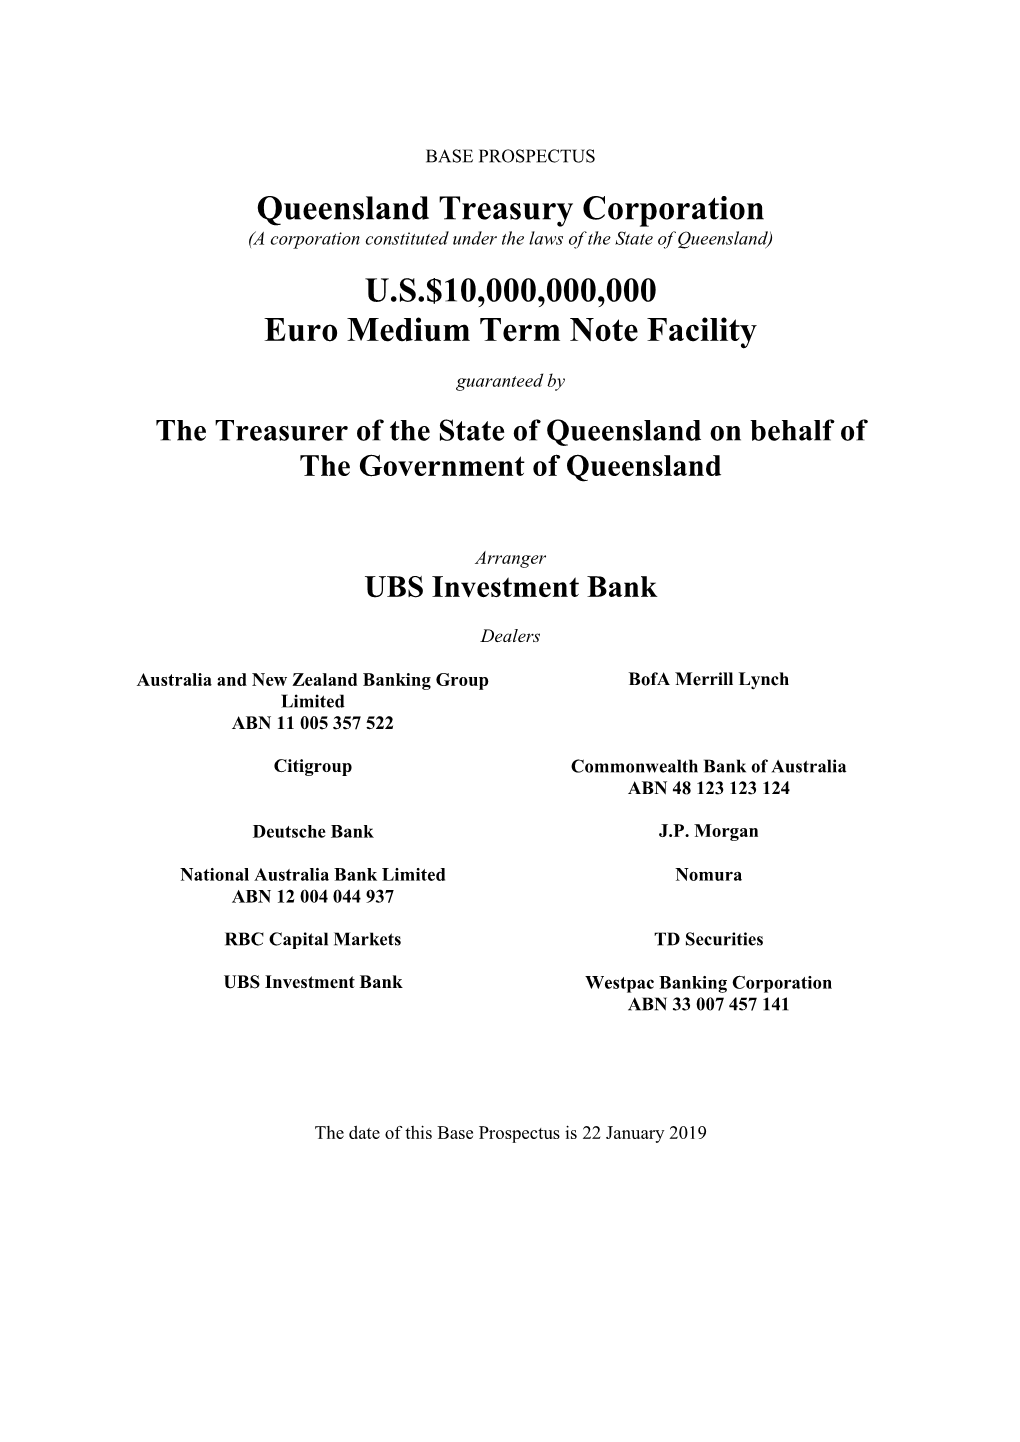 Queensland Treasury Corporation U.S